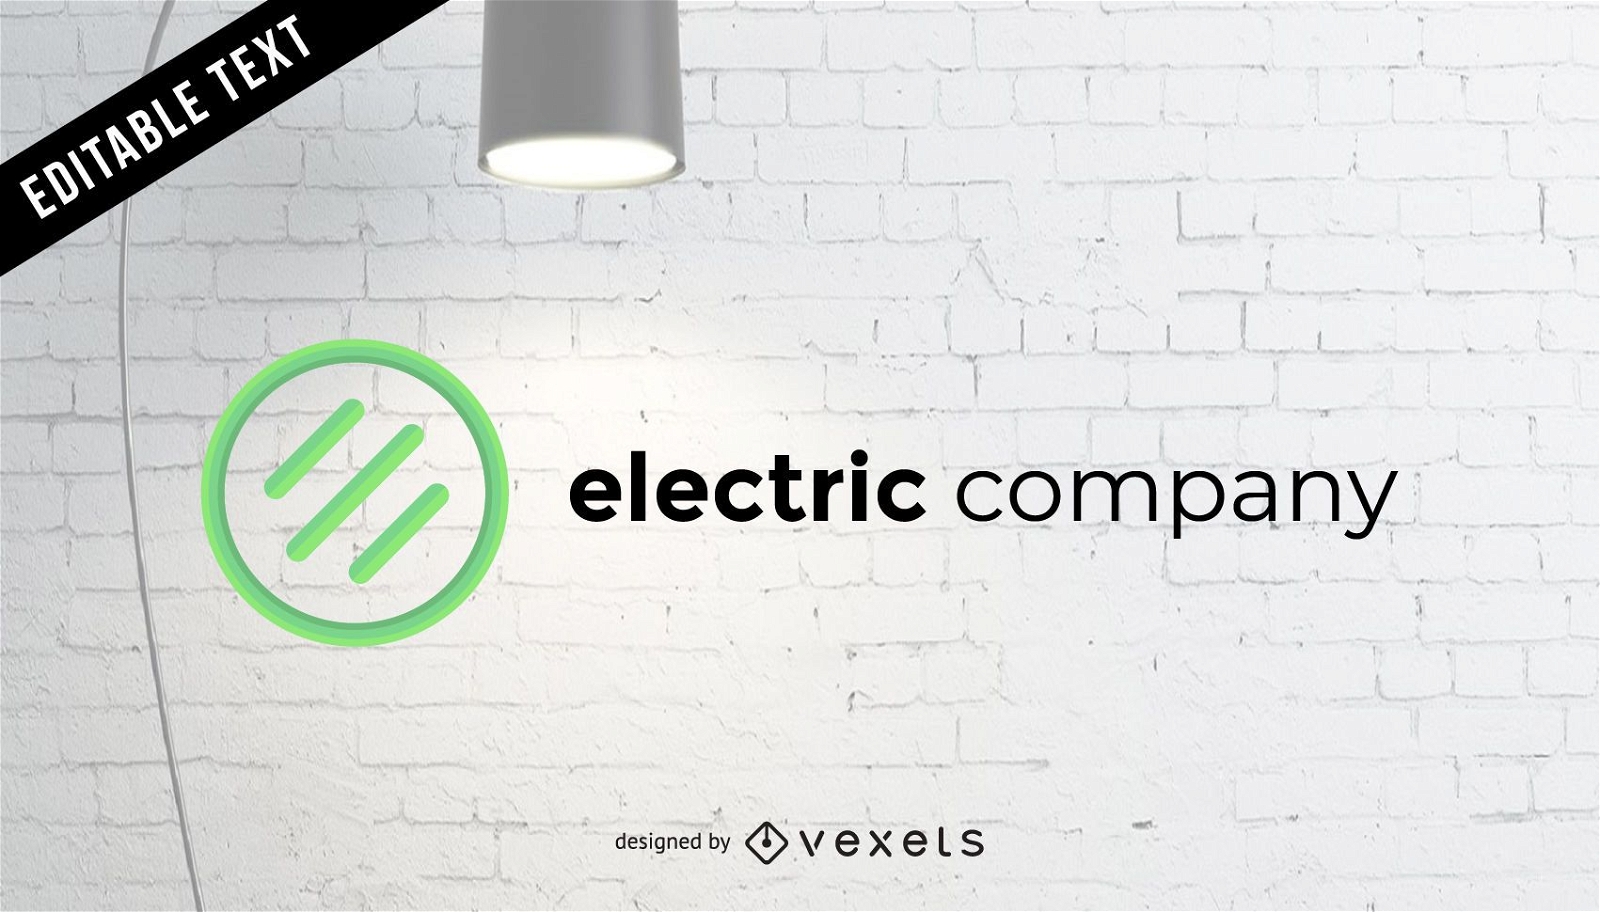 Electric company logo